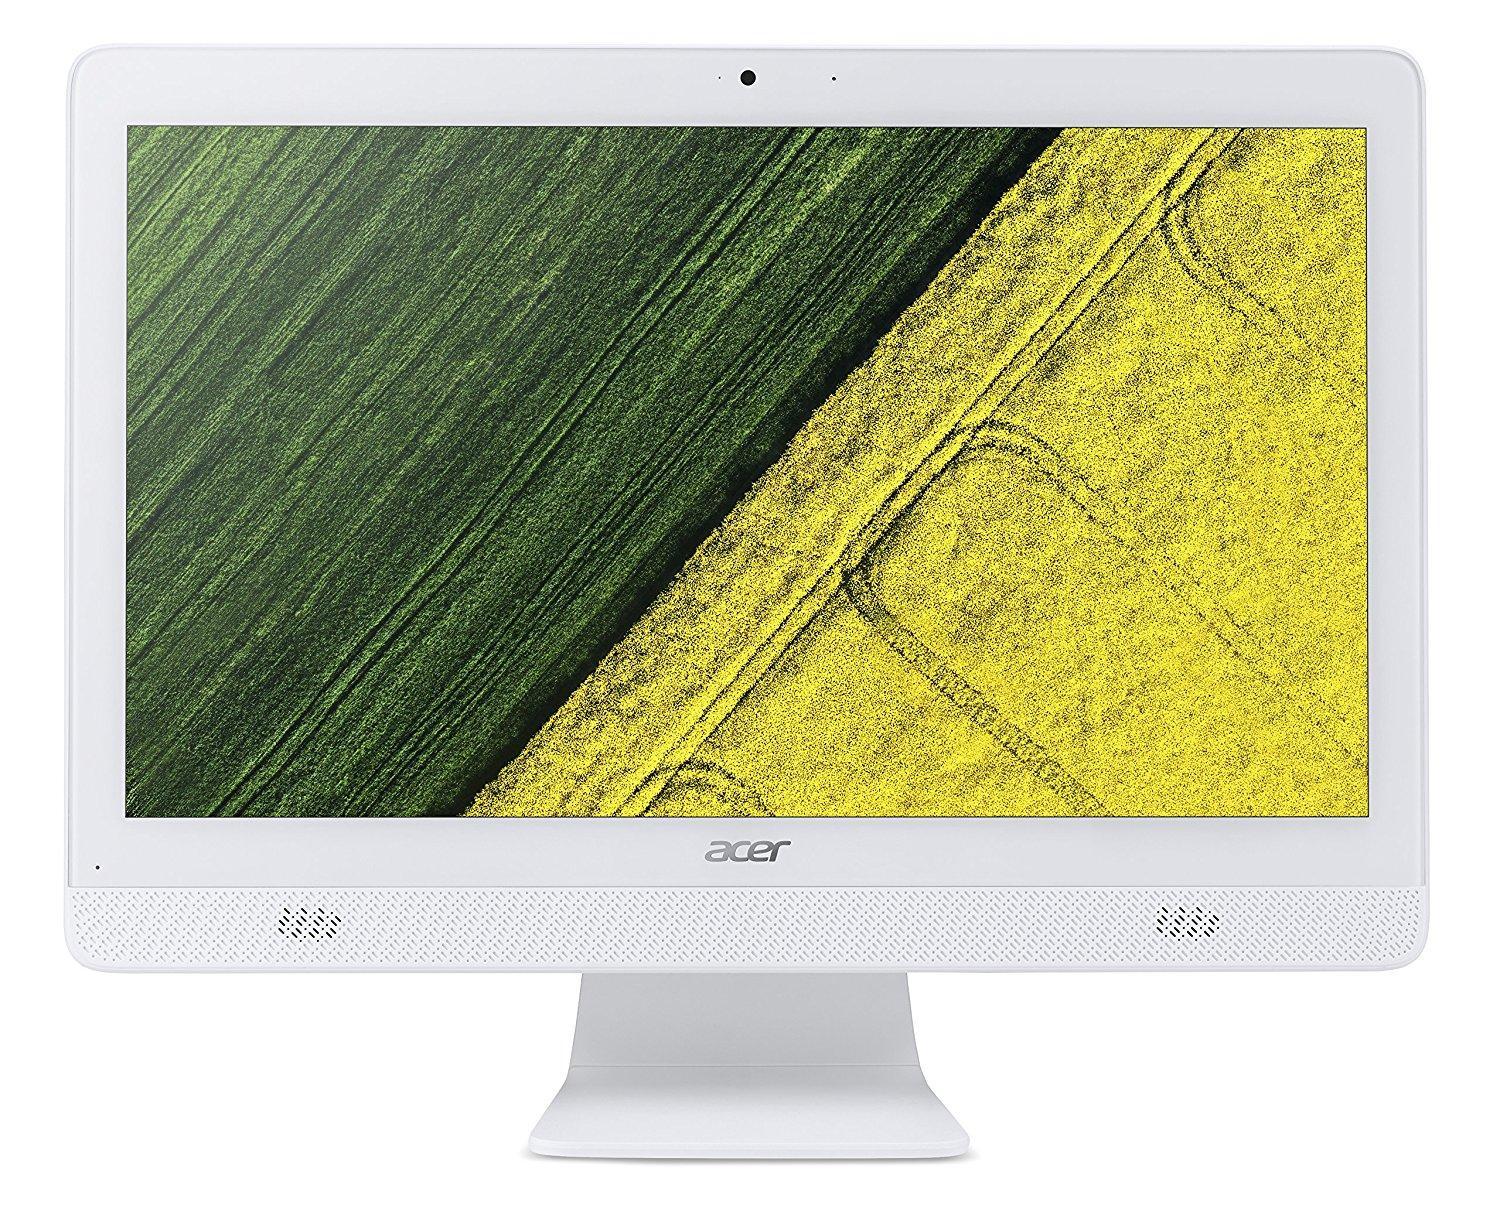 Моноблок Acer Aspire C20-720, Intel Celeron J3060, 1600 МГц, 4096 Мб, 1000 Гб, Intel HD Graphics 400, DVD-RW, Wi-Fi, Bluetooth, DOS, 19.5" (1600x900)